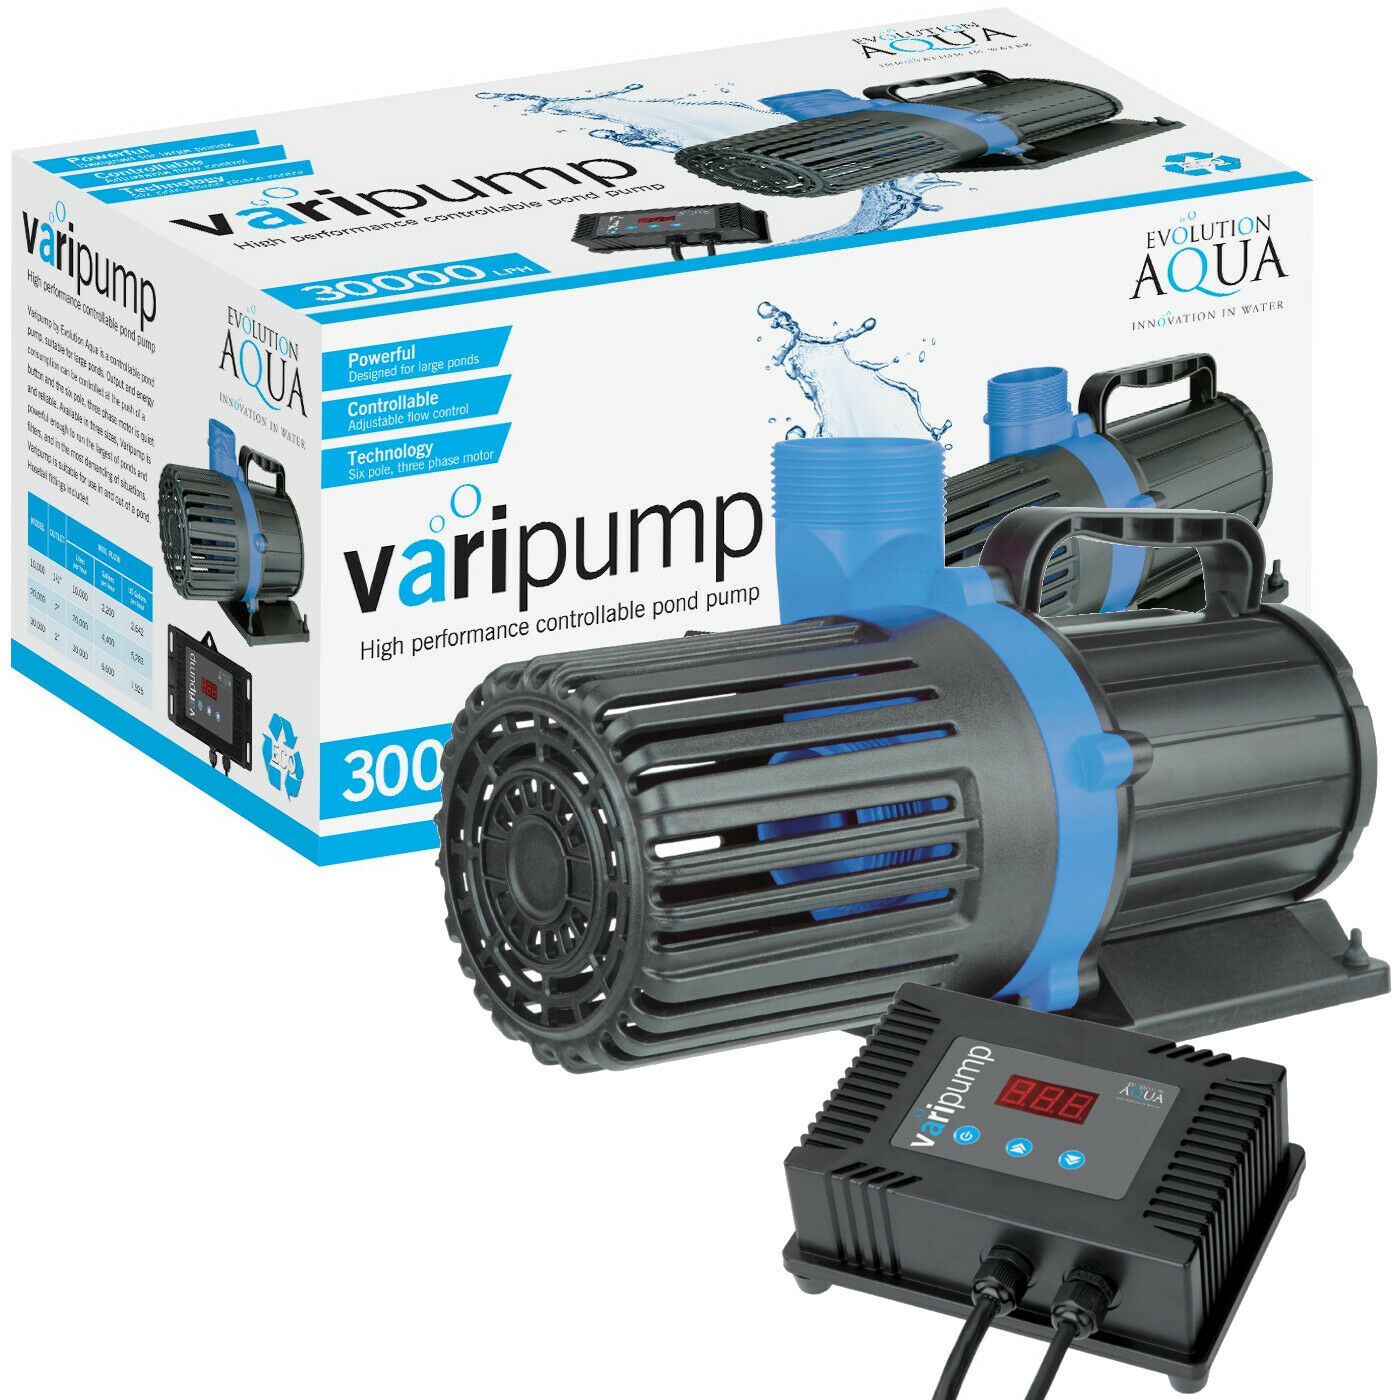 Evolution Aqua Varipump Variable Flow Pond Pump 30000L/h